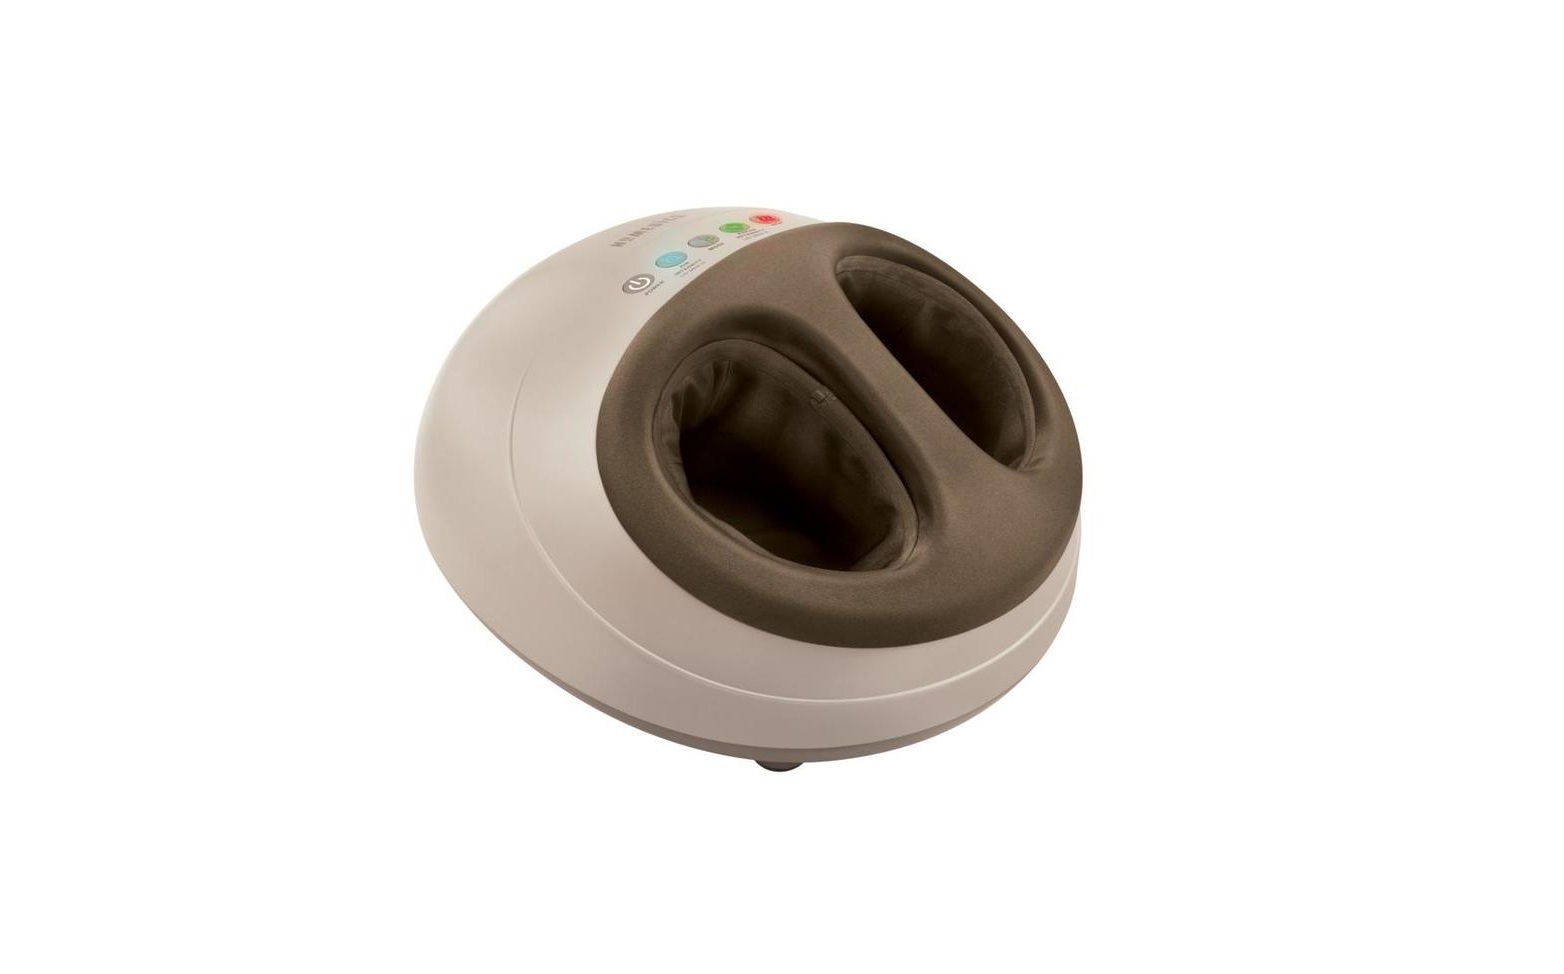 Homedics FMS-350H Shiatsu Air Pro Foot Massager with Heat Instruction Manual and Warranty Information